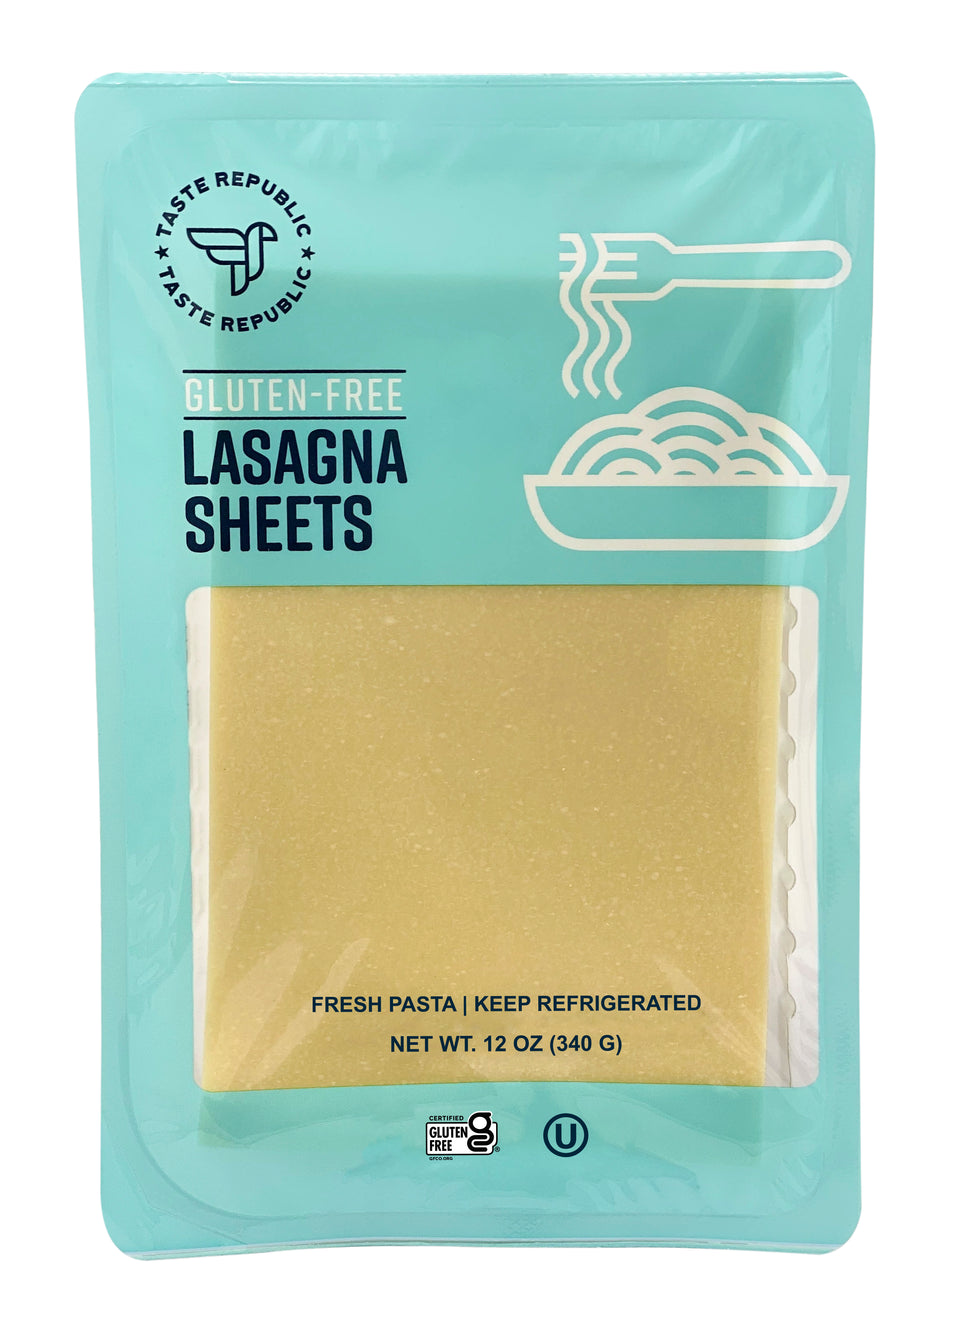 Fresh Gluten-Free Lasagna Sheets (6-Pack)